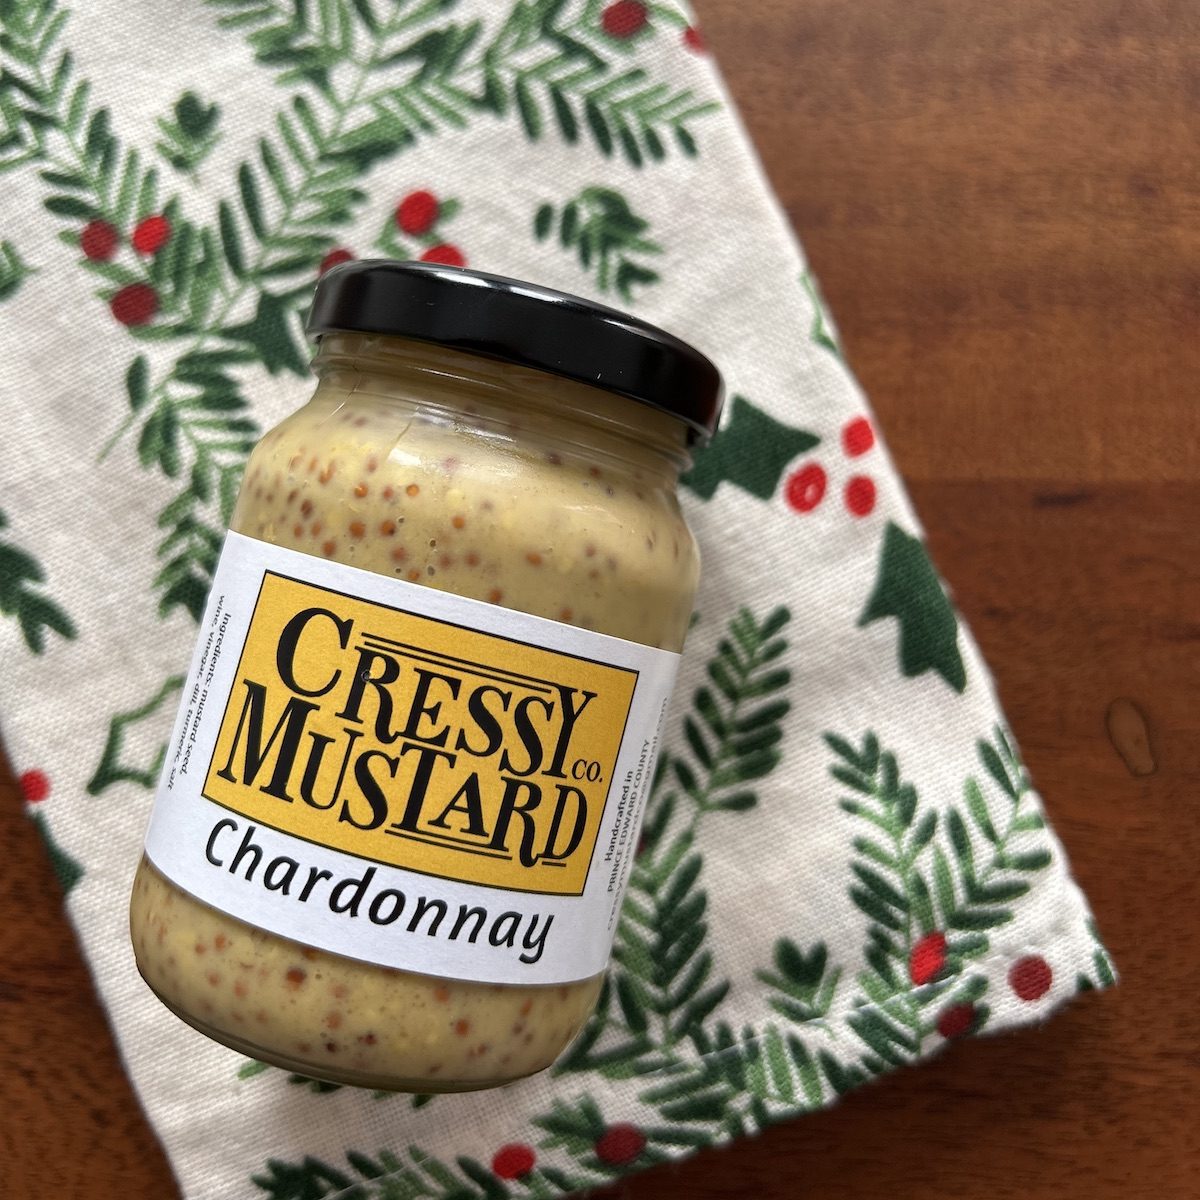 chardonnay cressy mustard